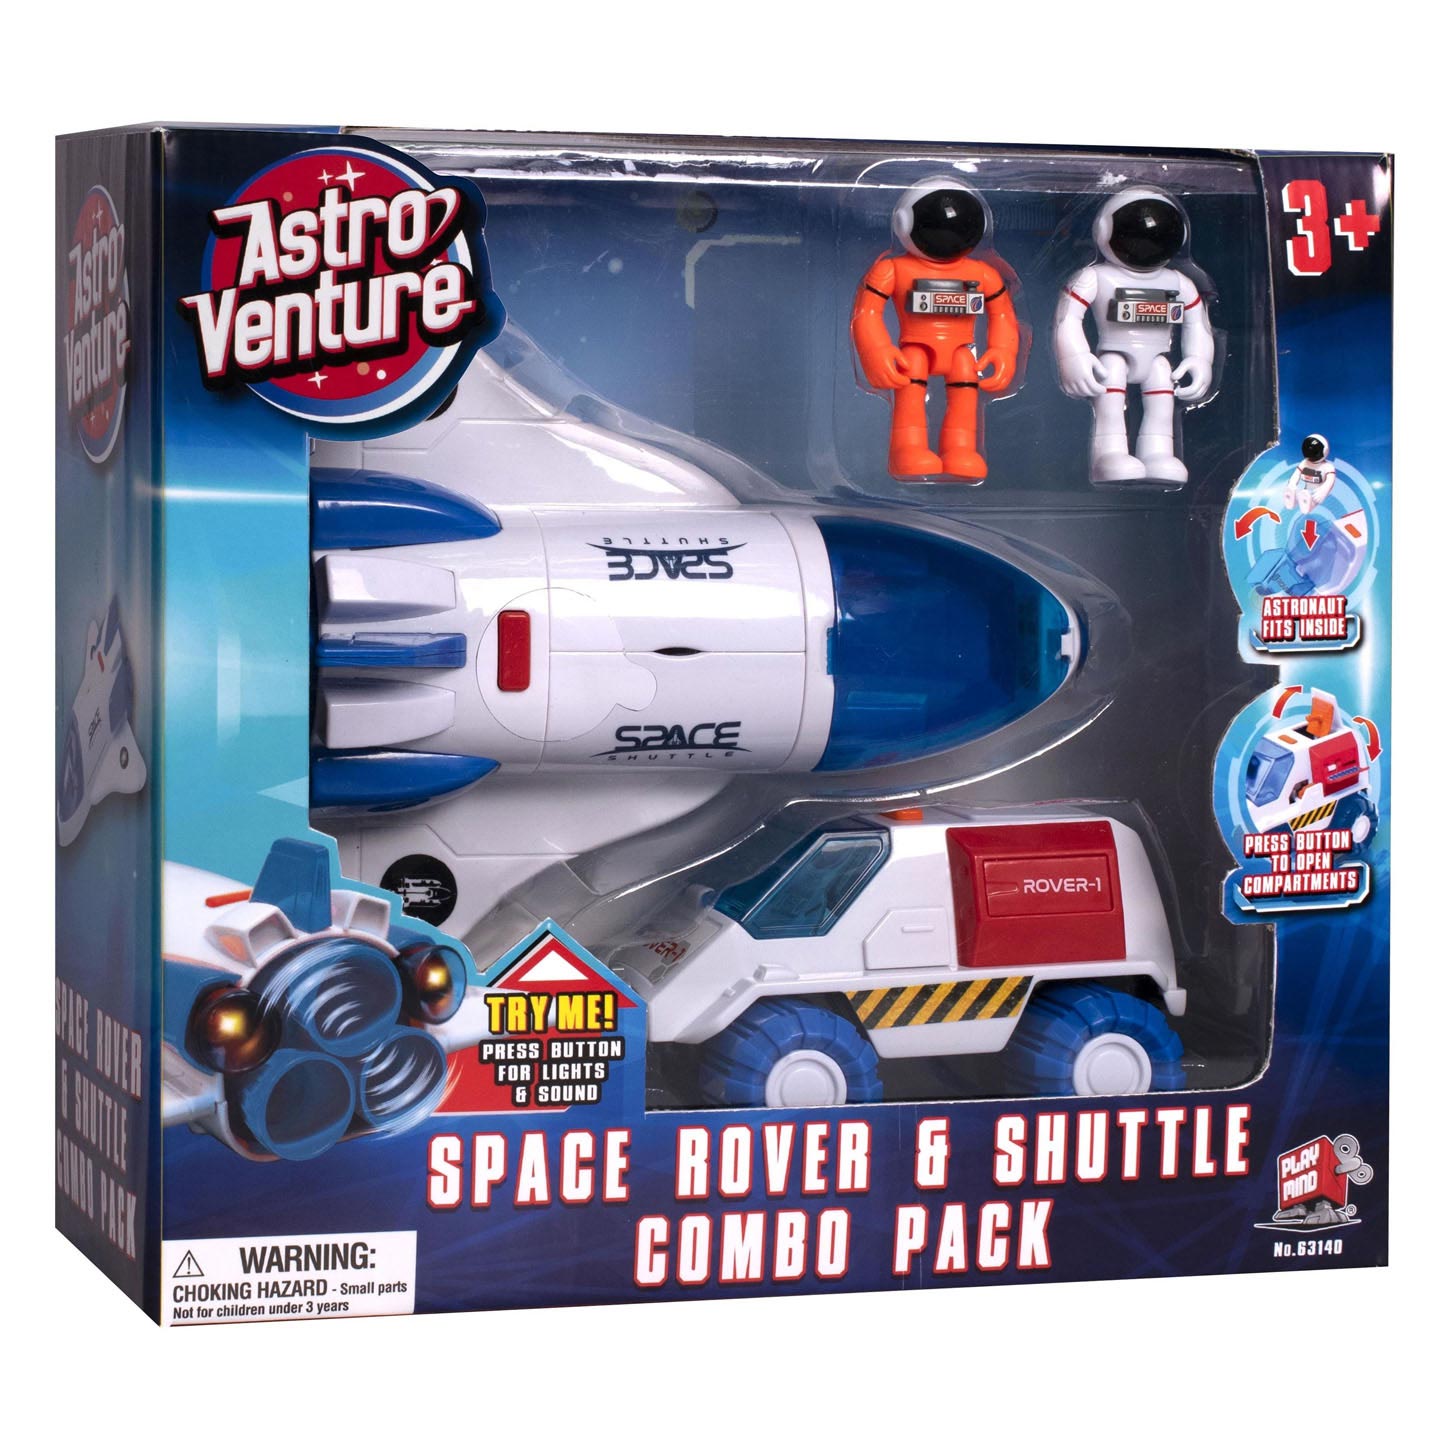 Astro Venture Space Raket & Shuttle